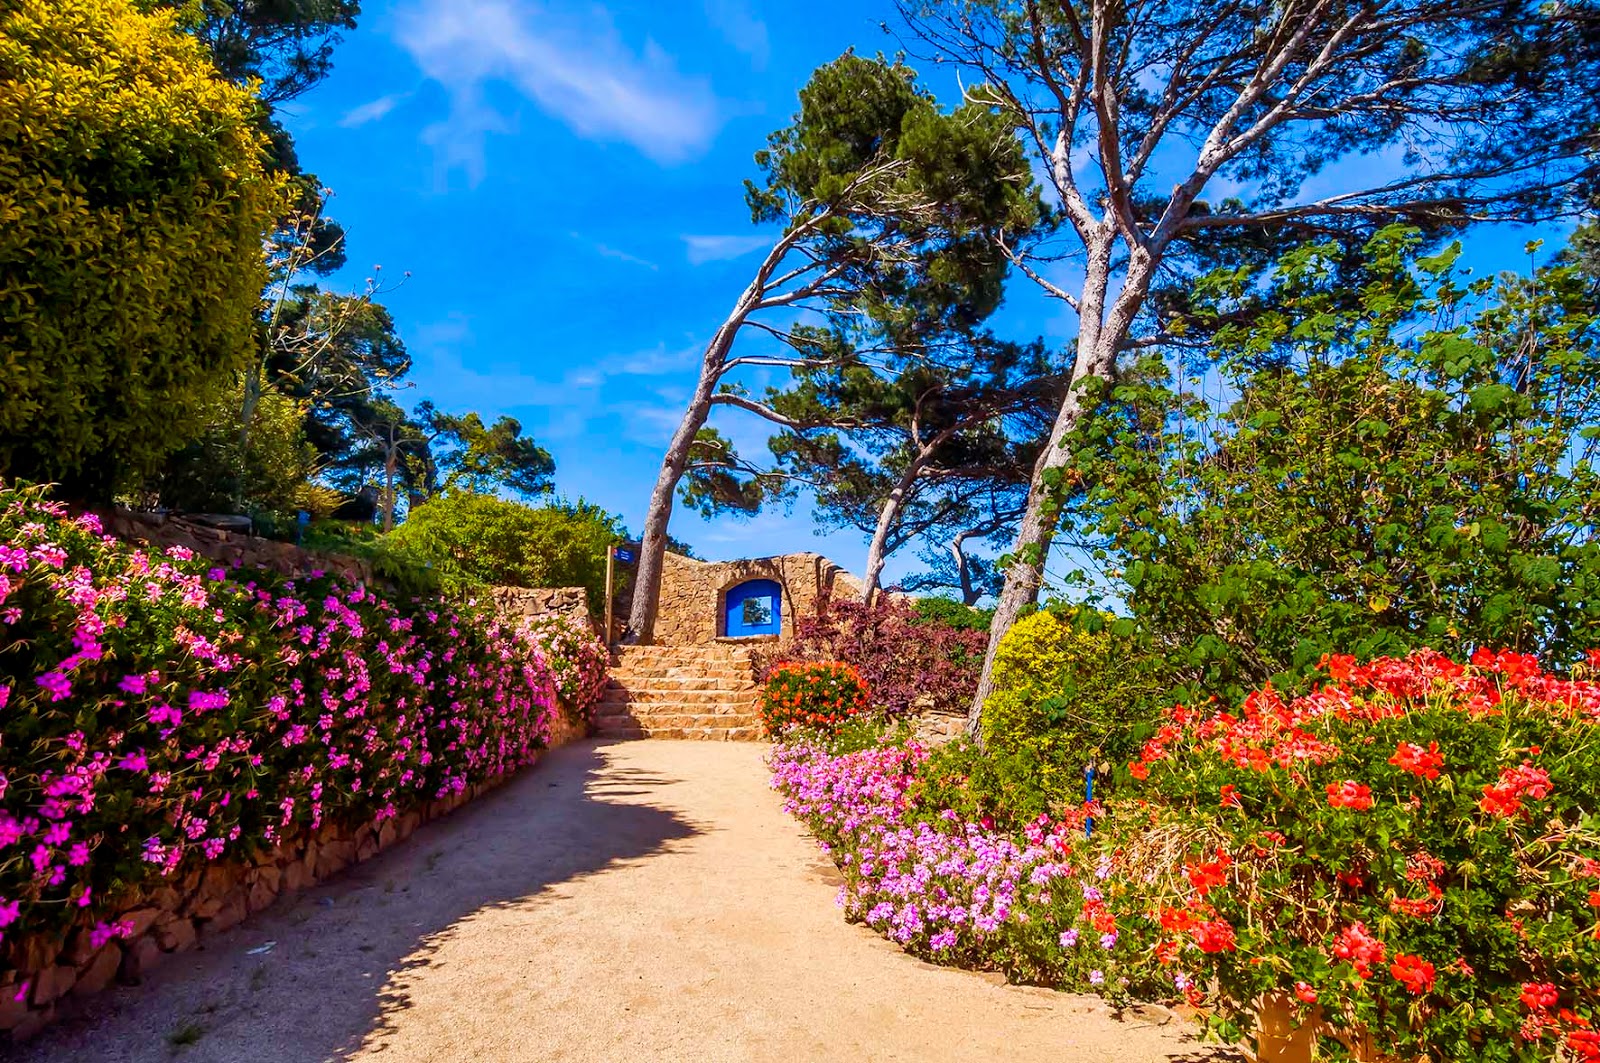 Cap Roig-ის ბოტანიკური ბაღი , Cap Roig botanic garden in costa brava, costa brava, barcelona, spain